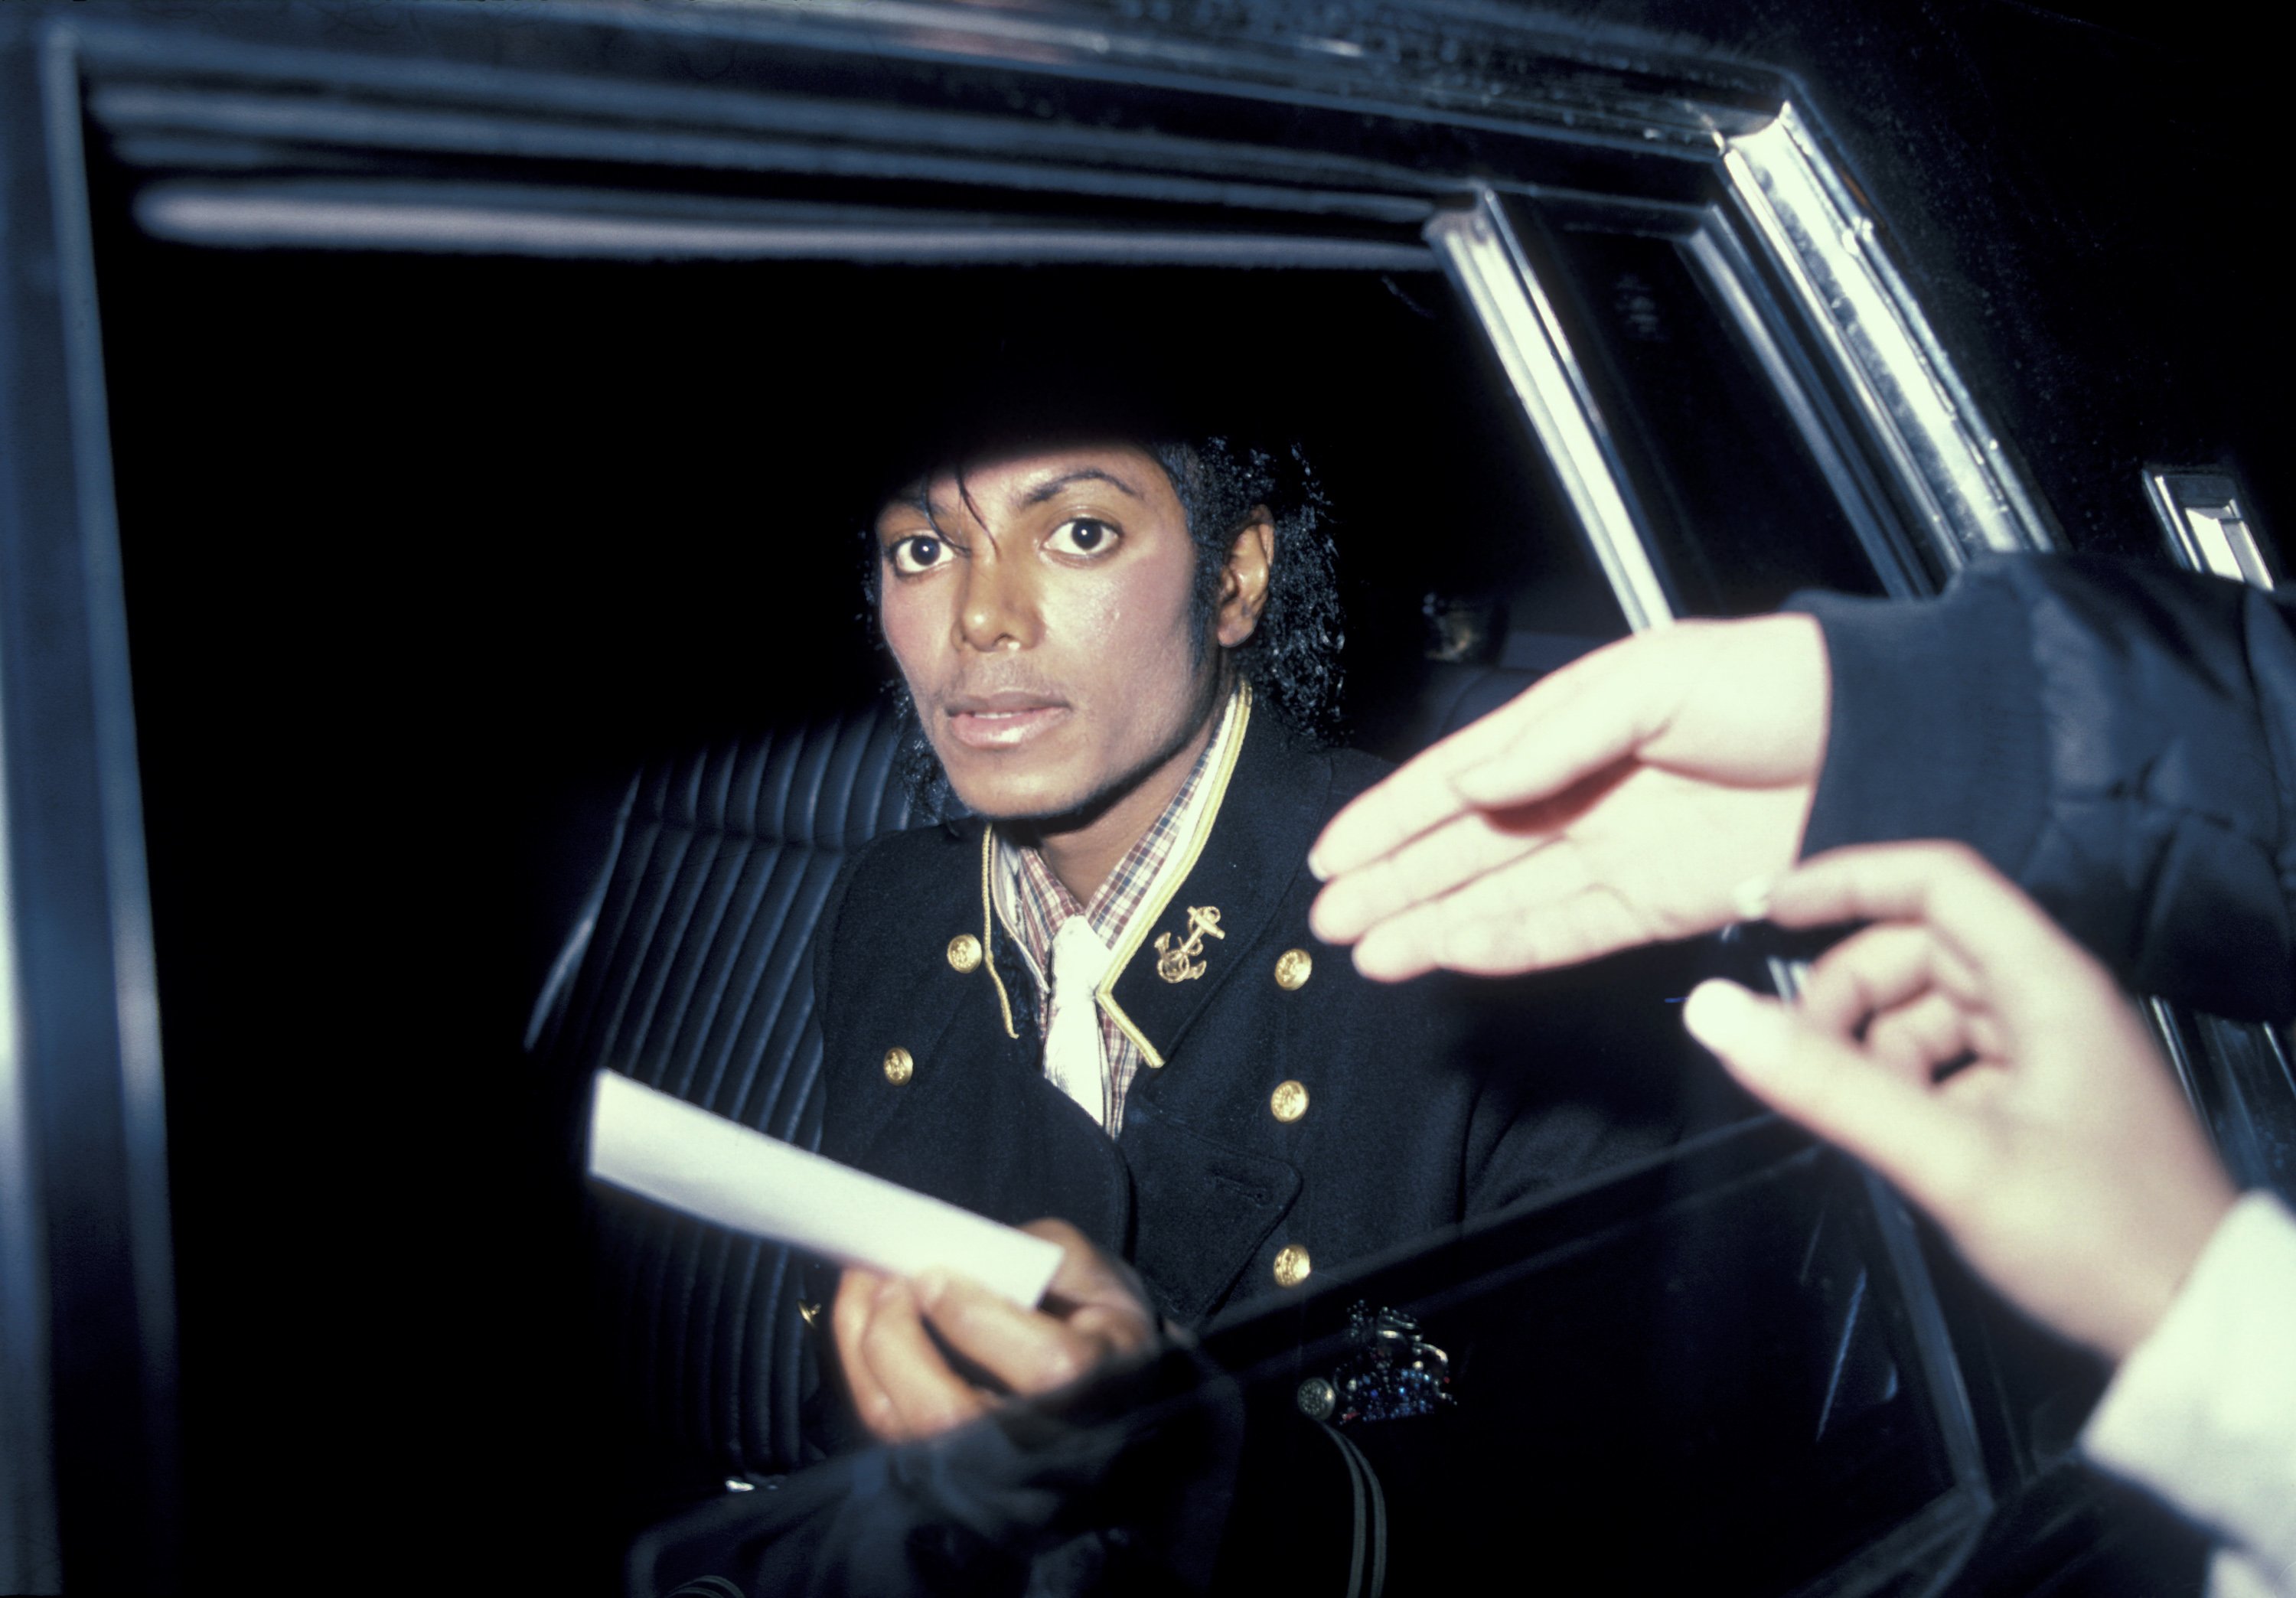 Michael Jackson in a car